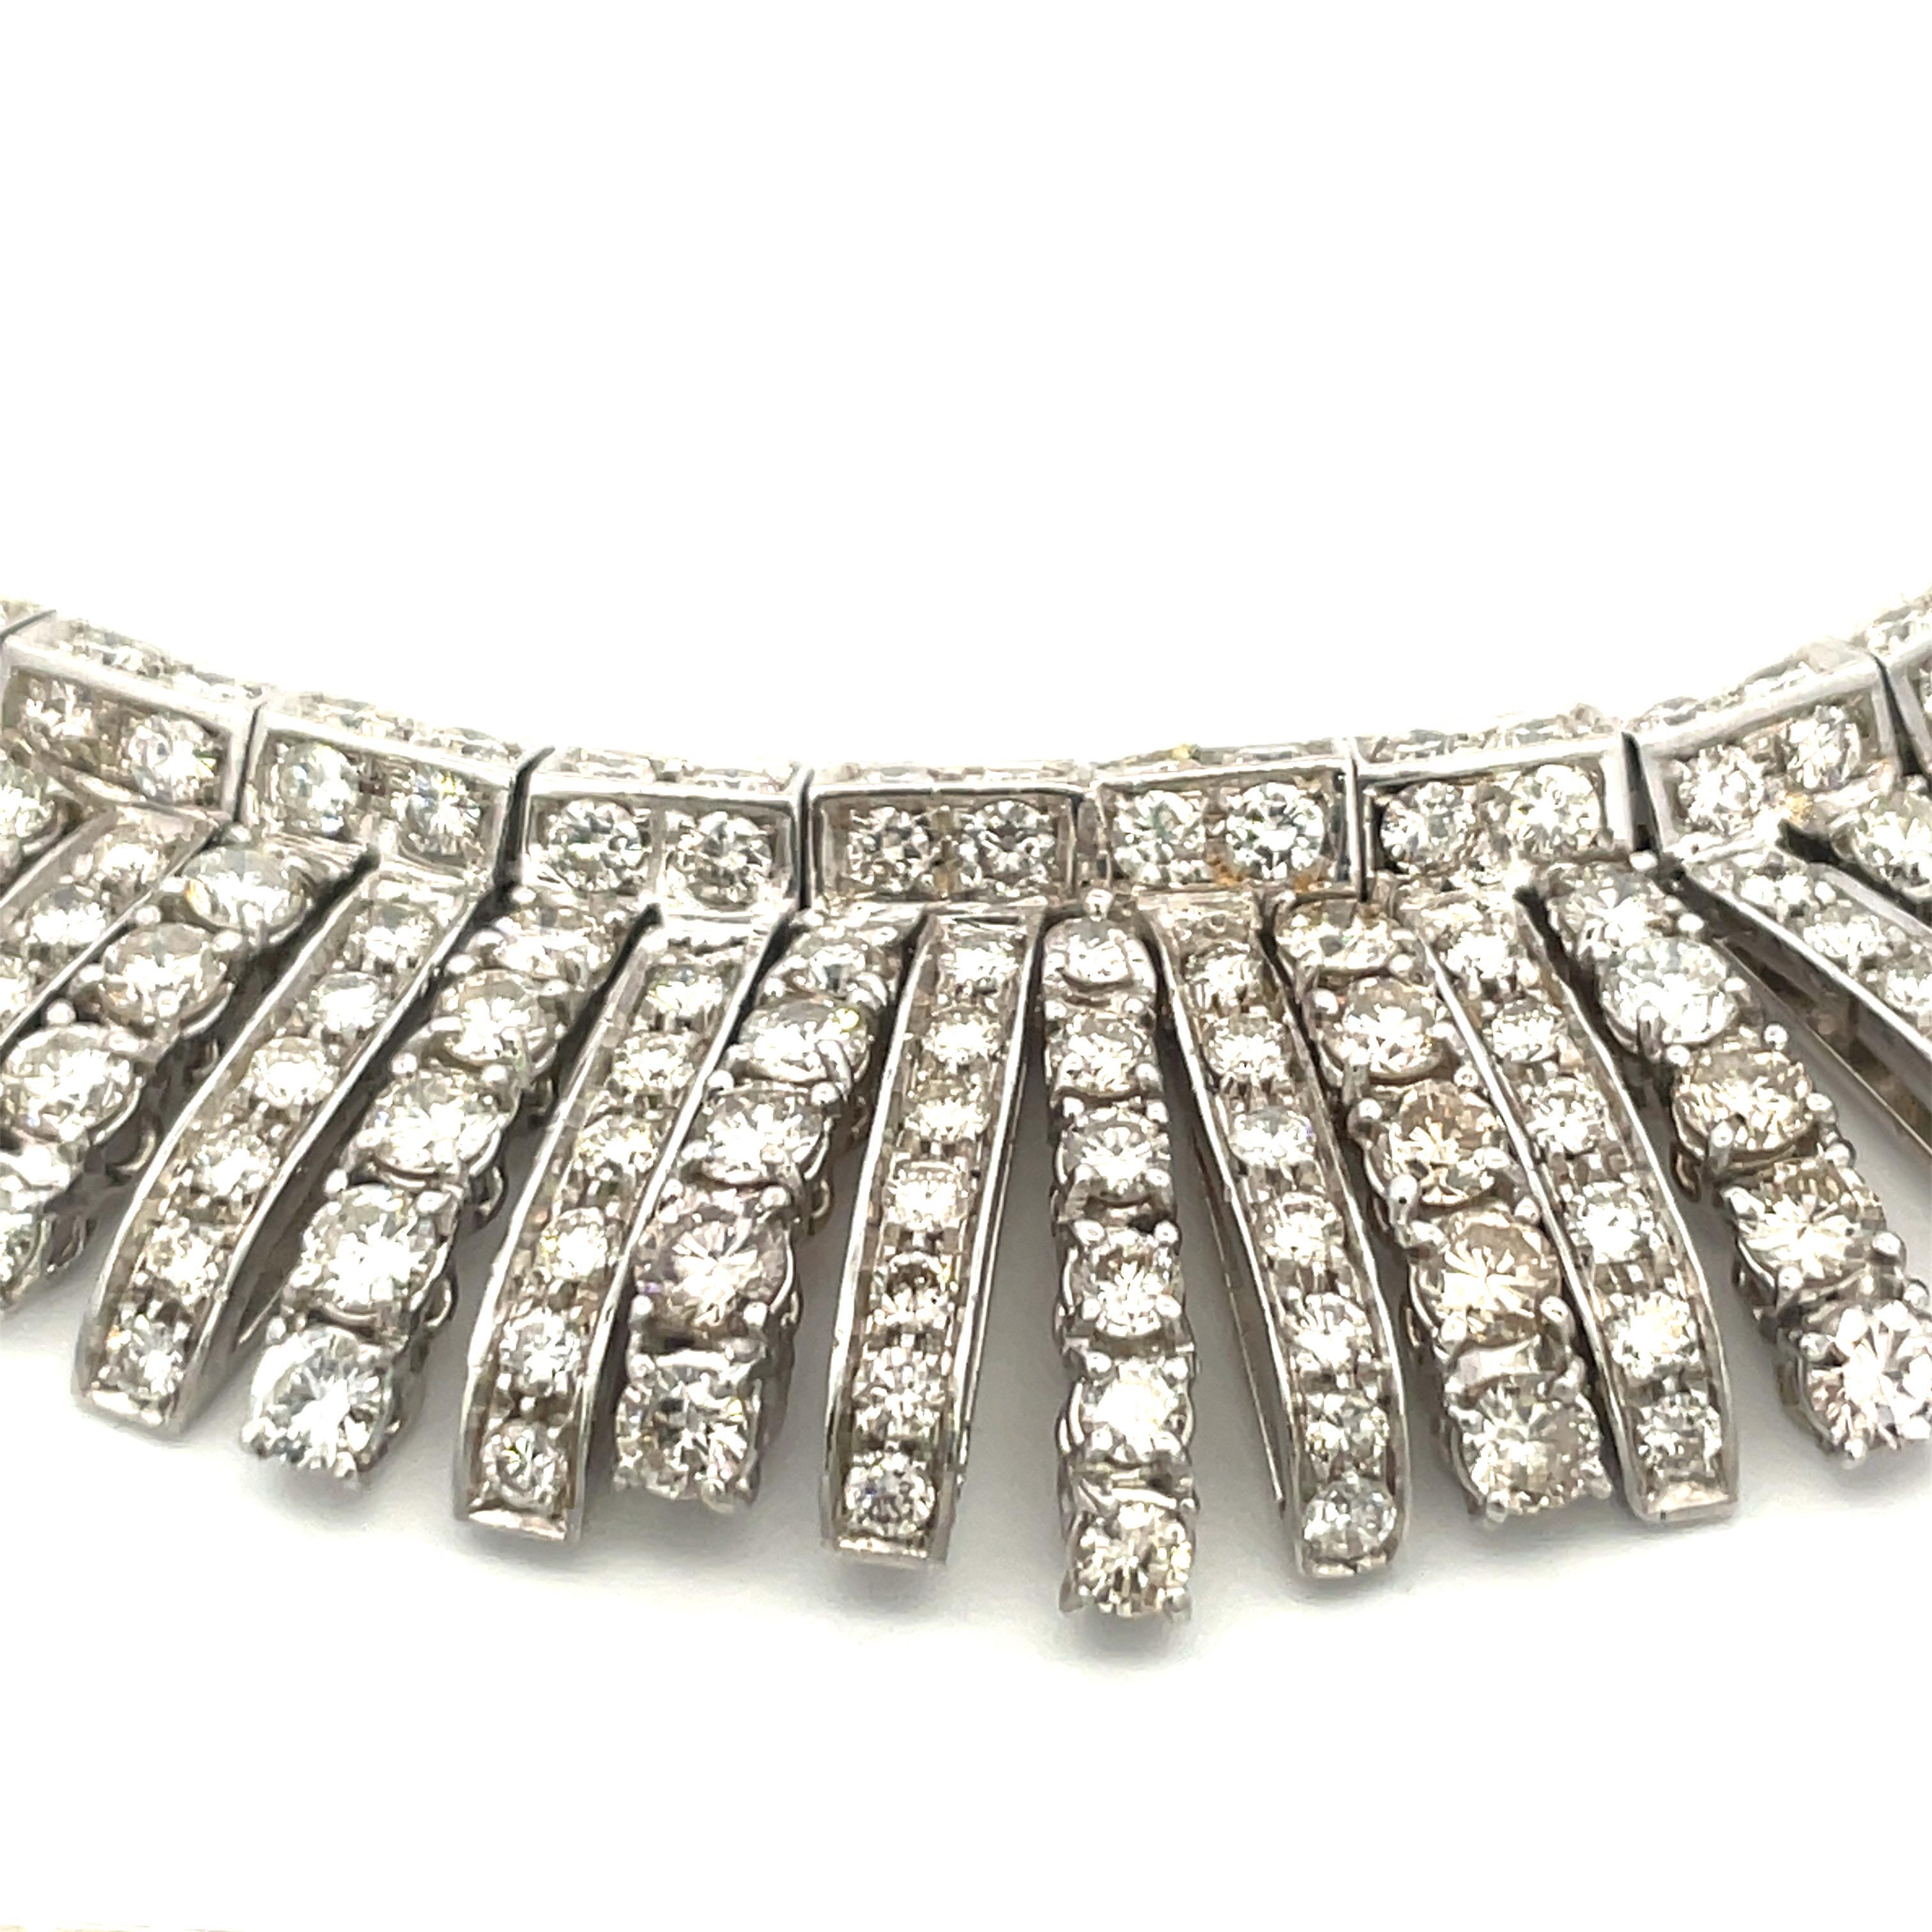 Vintage Diamond Collar Bib Necklace 66 Carats 18 Karat White Gold 113.5 Grams For Sale 1